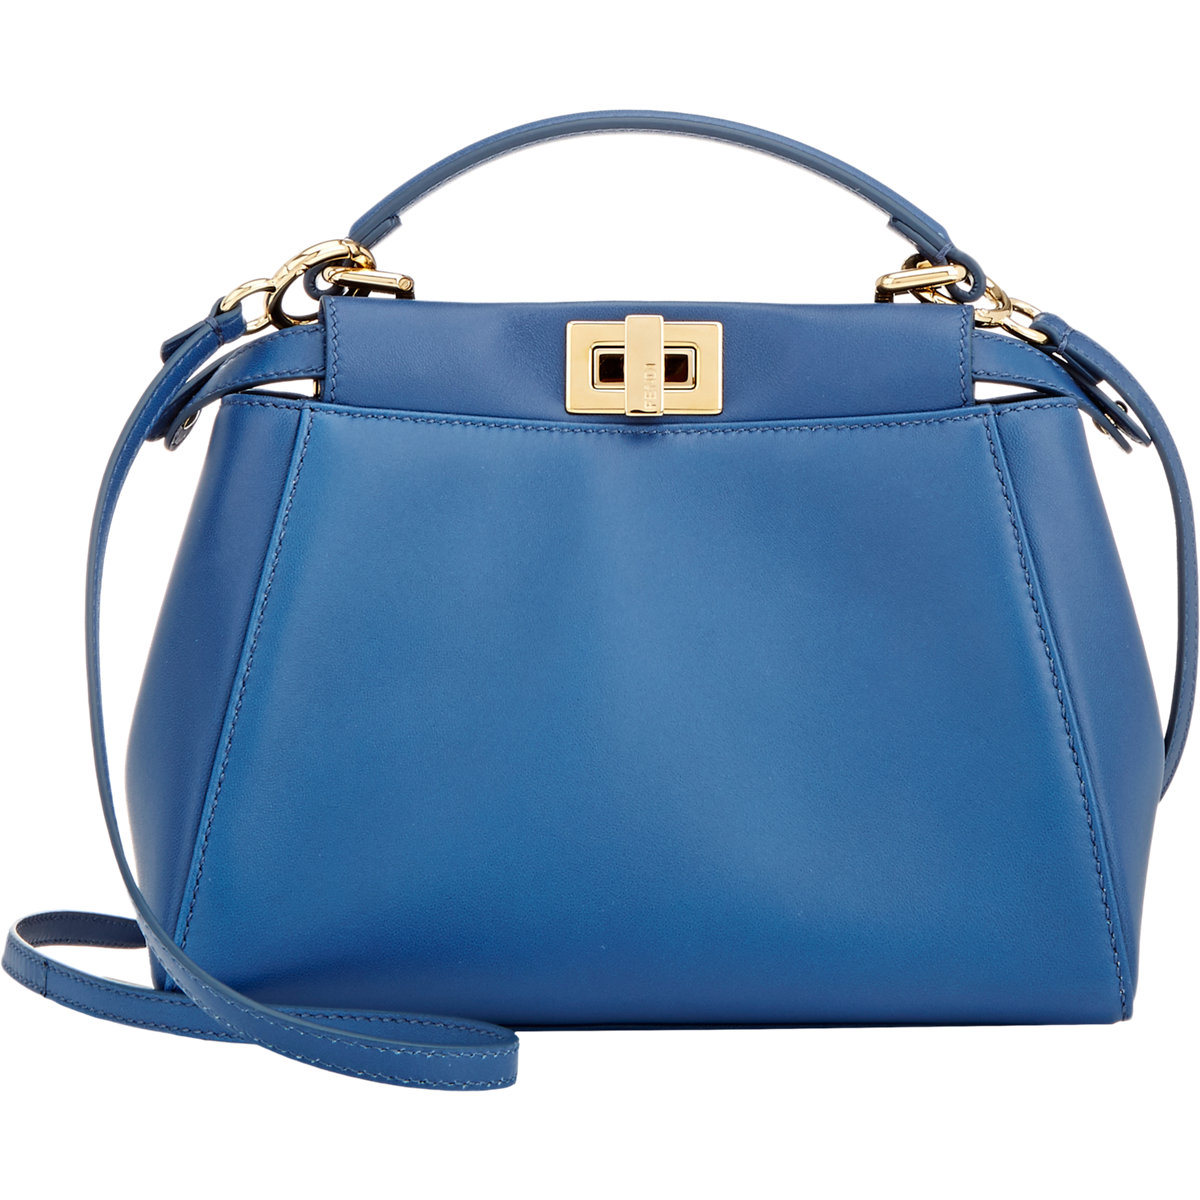 Lyst - Fendi Peekaboo Mini Leather Bag in Blue